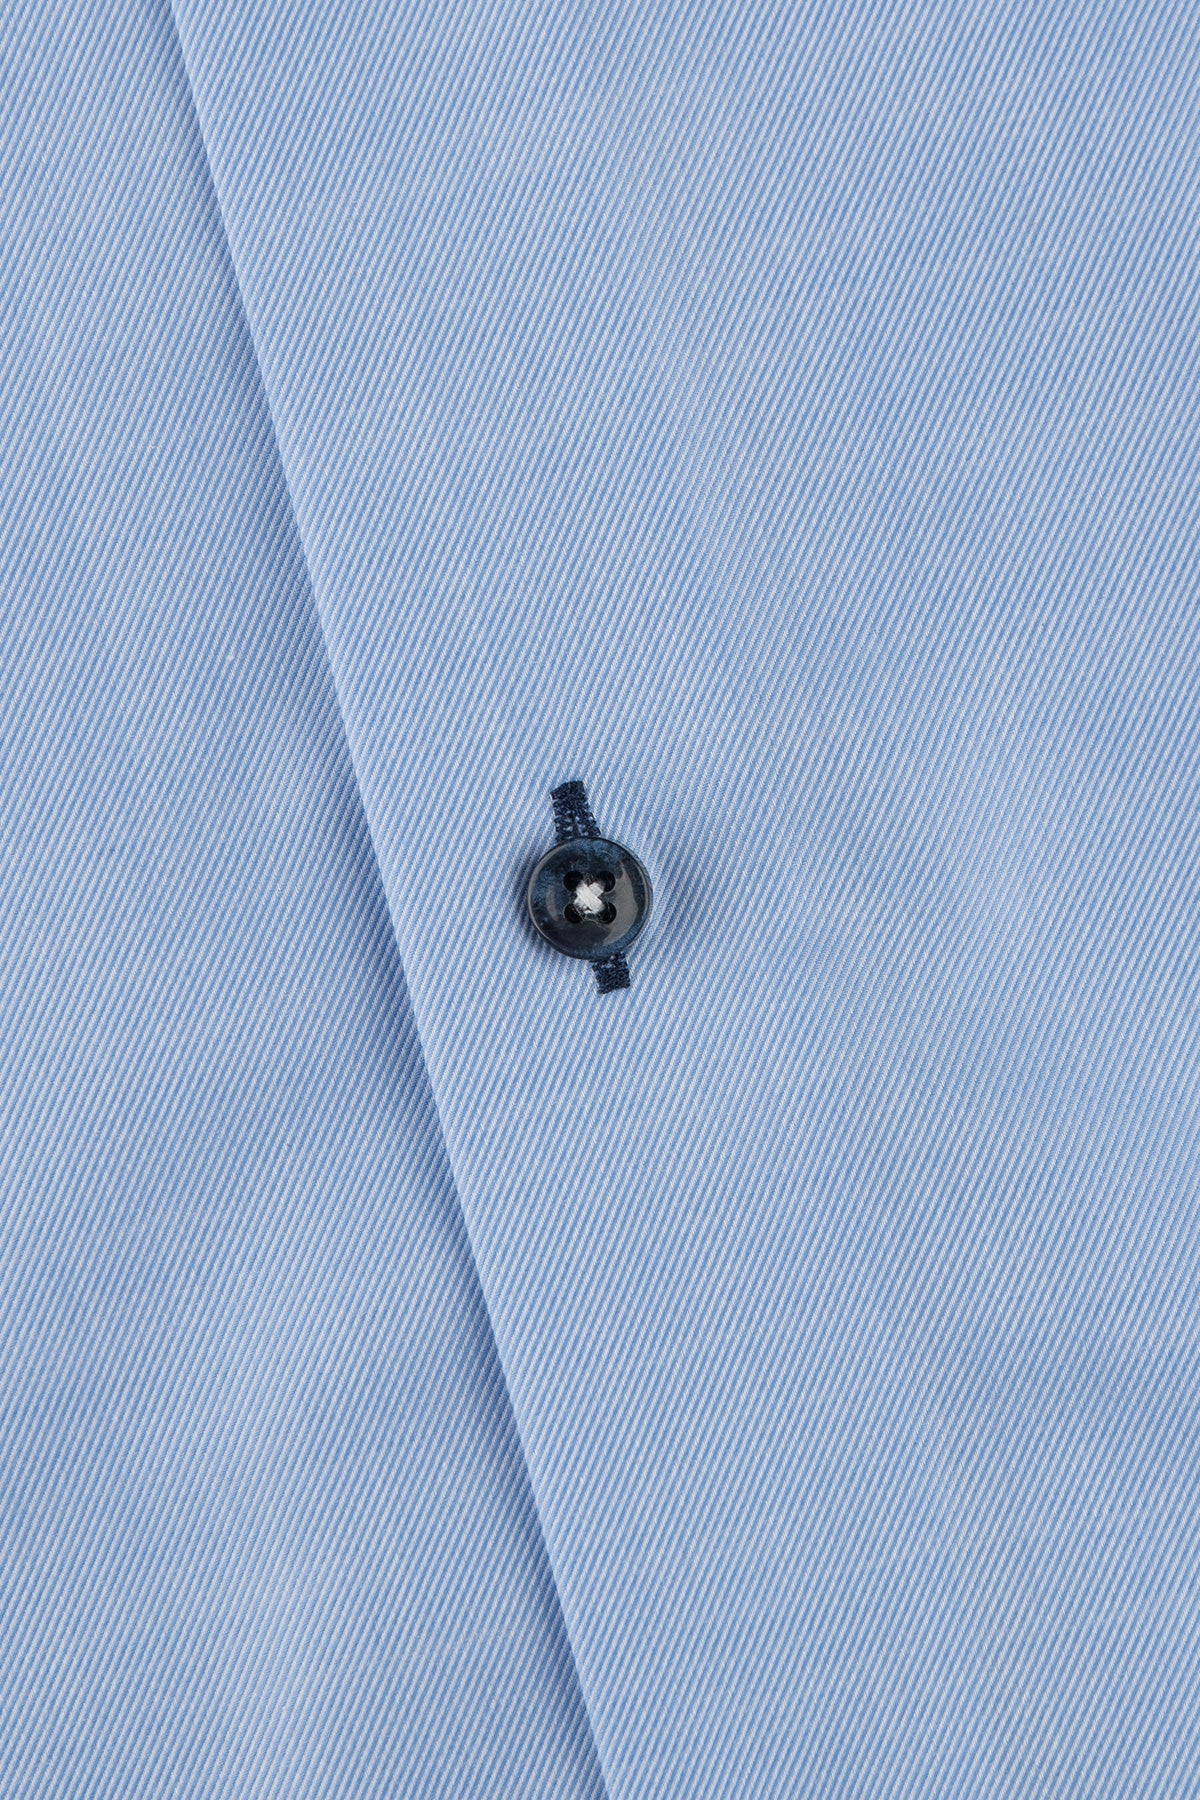 Light blue slim fit shirt with contrast details